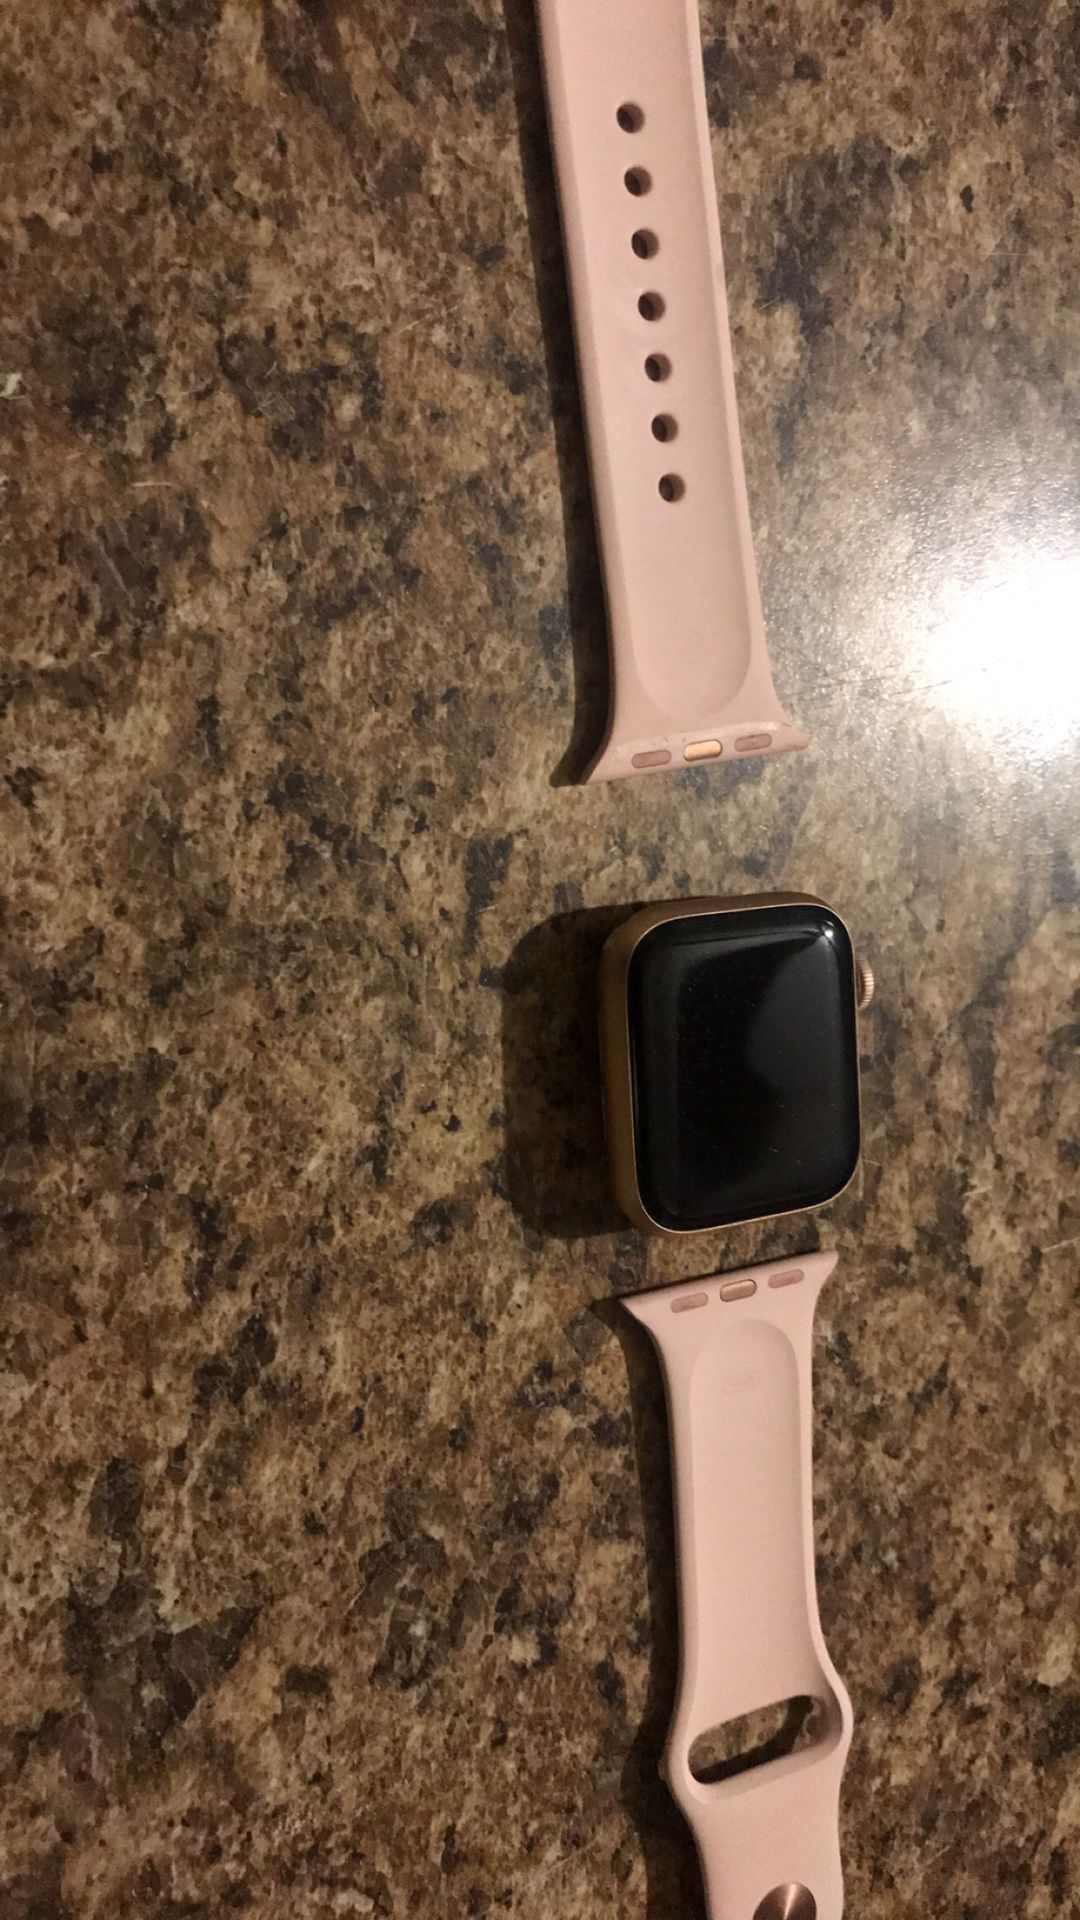 Apple Watch Series 4 Cellular + GPS